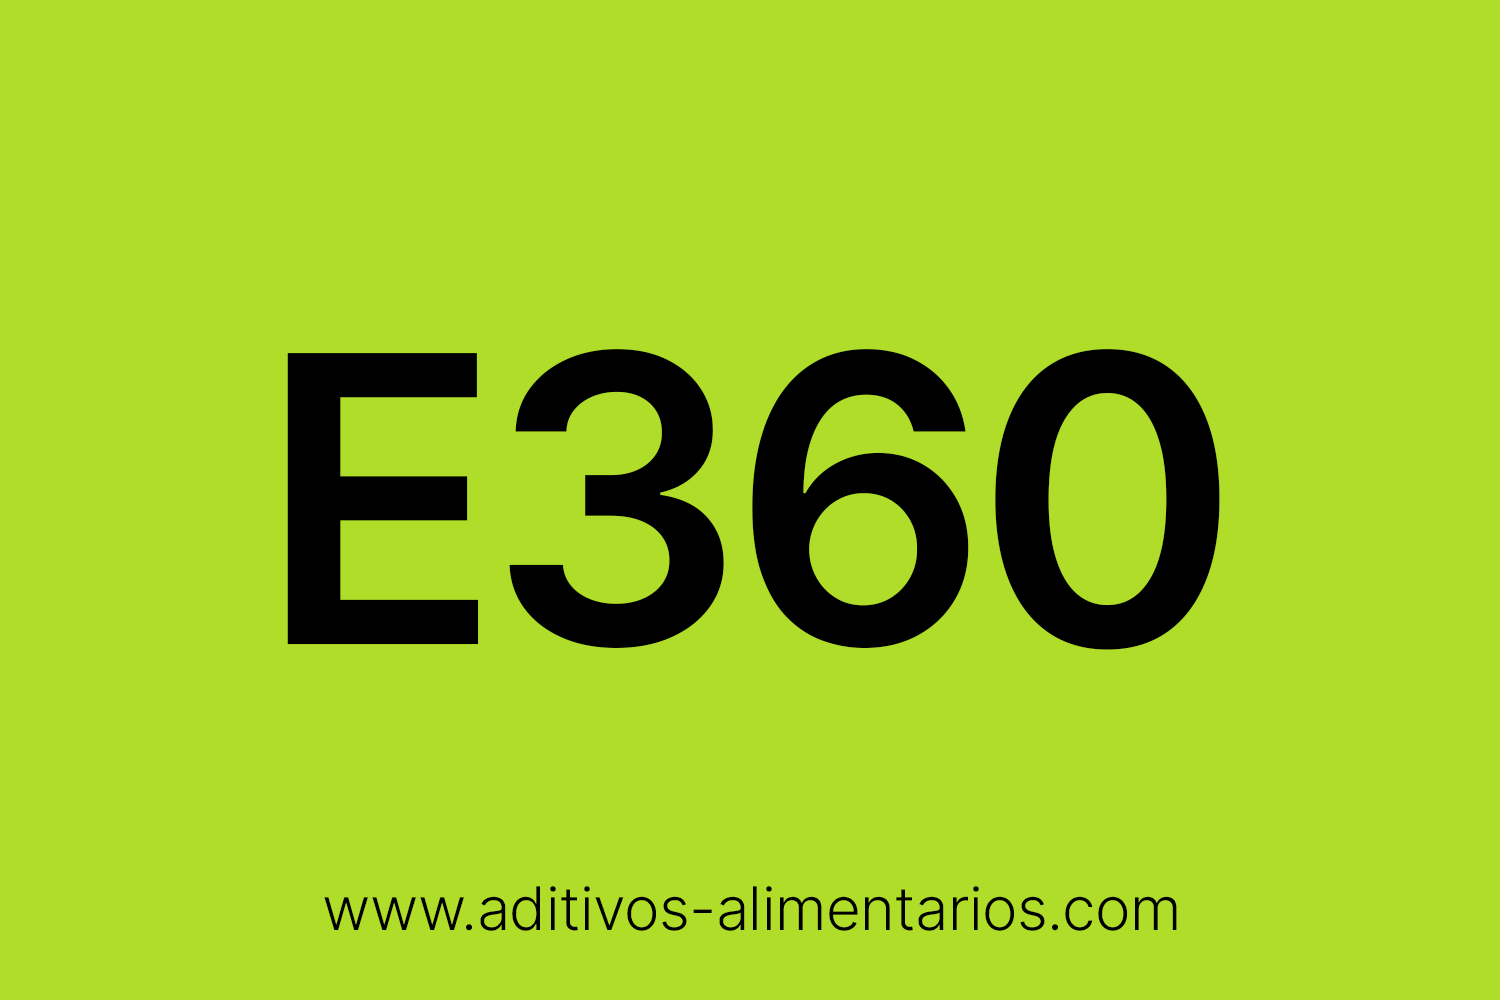 Aditivo Alimentario - E360 - Adipato Magnésico